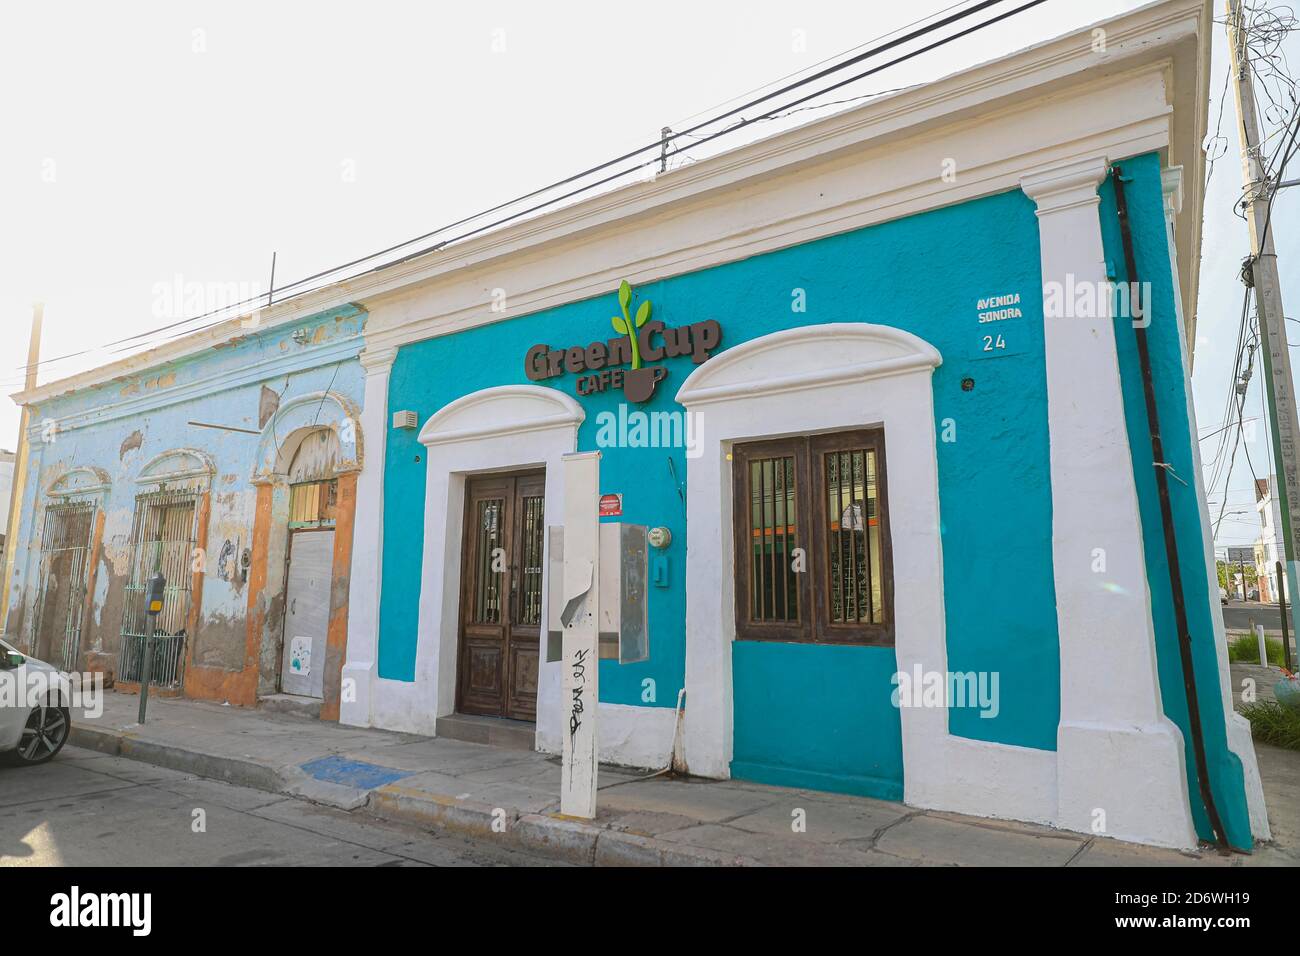 Azul histórico mexico city hi-res stock photography and images - Alamy